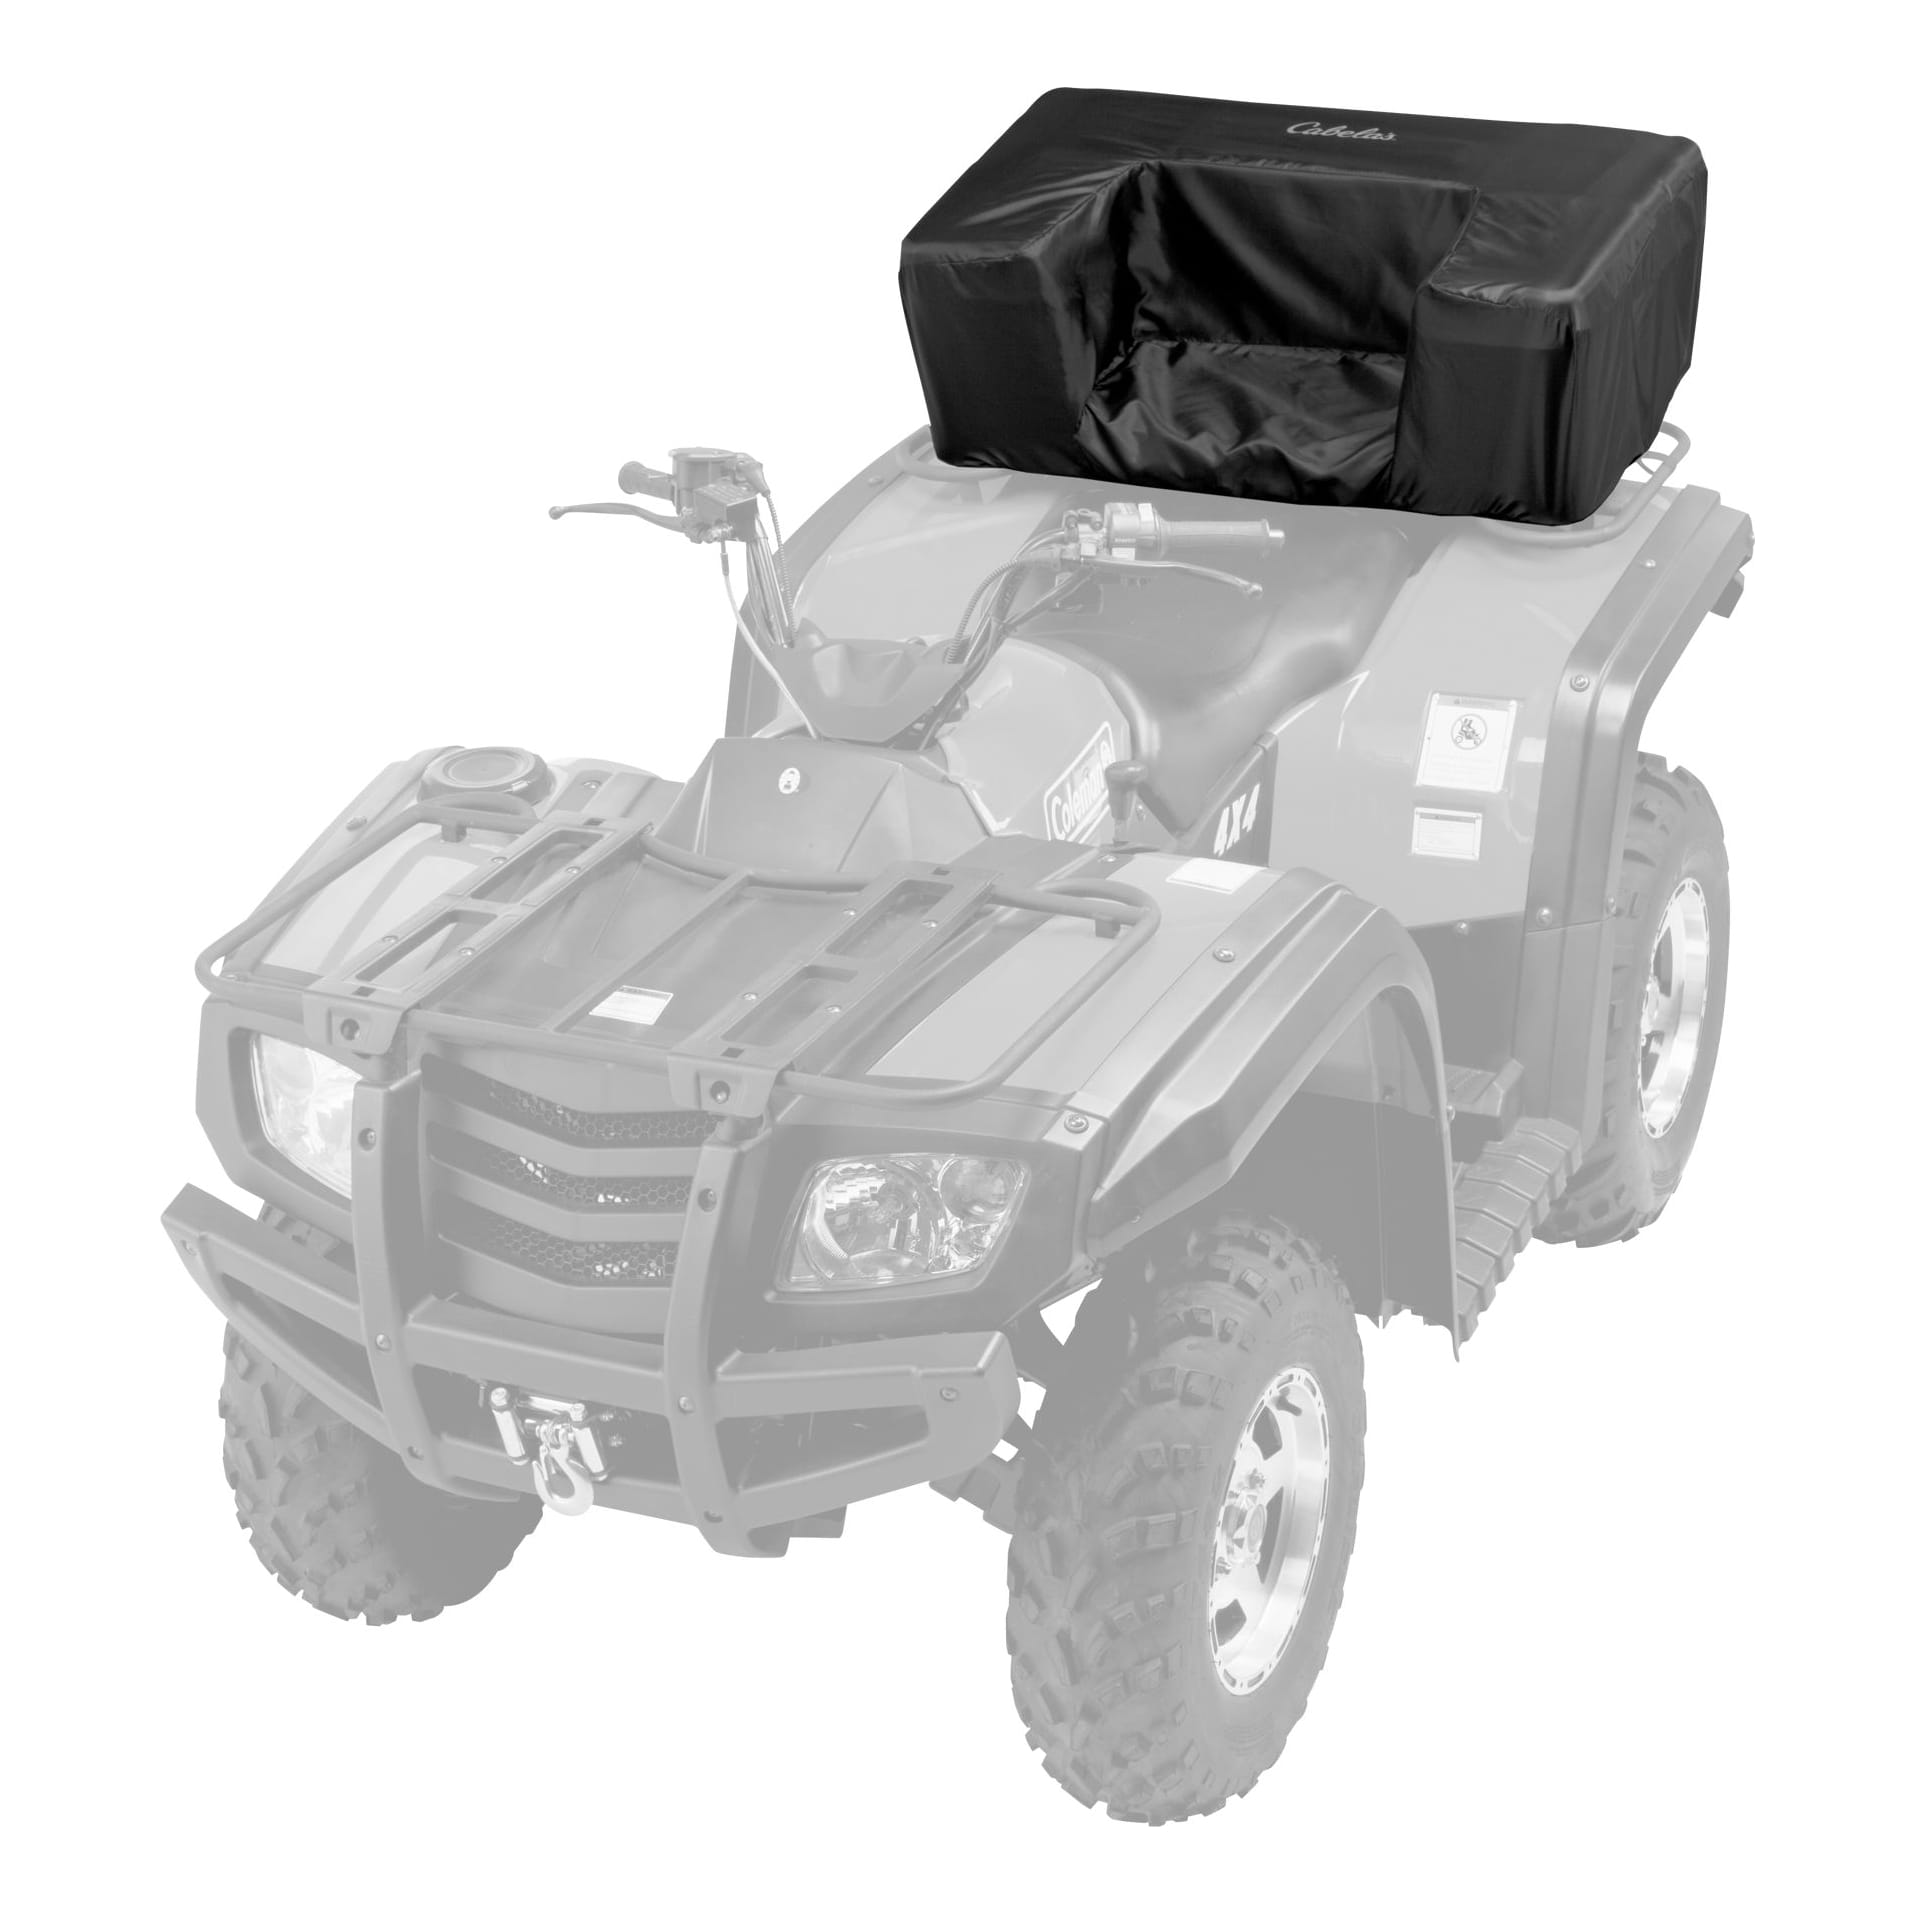 Cabela's Tac Gear ATV Rear Padded Bag - Black